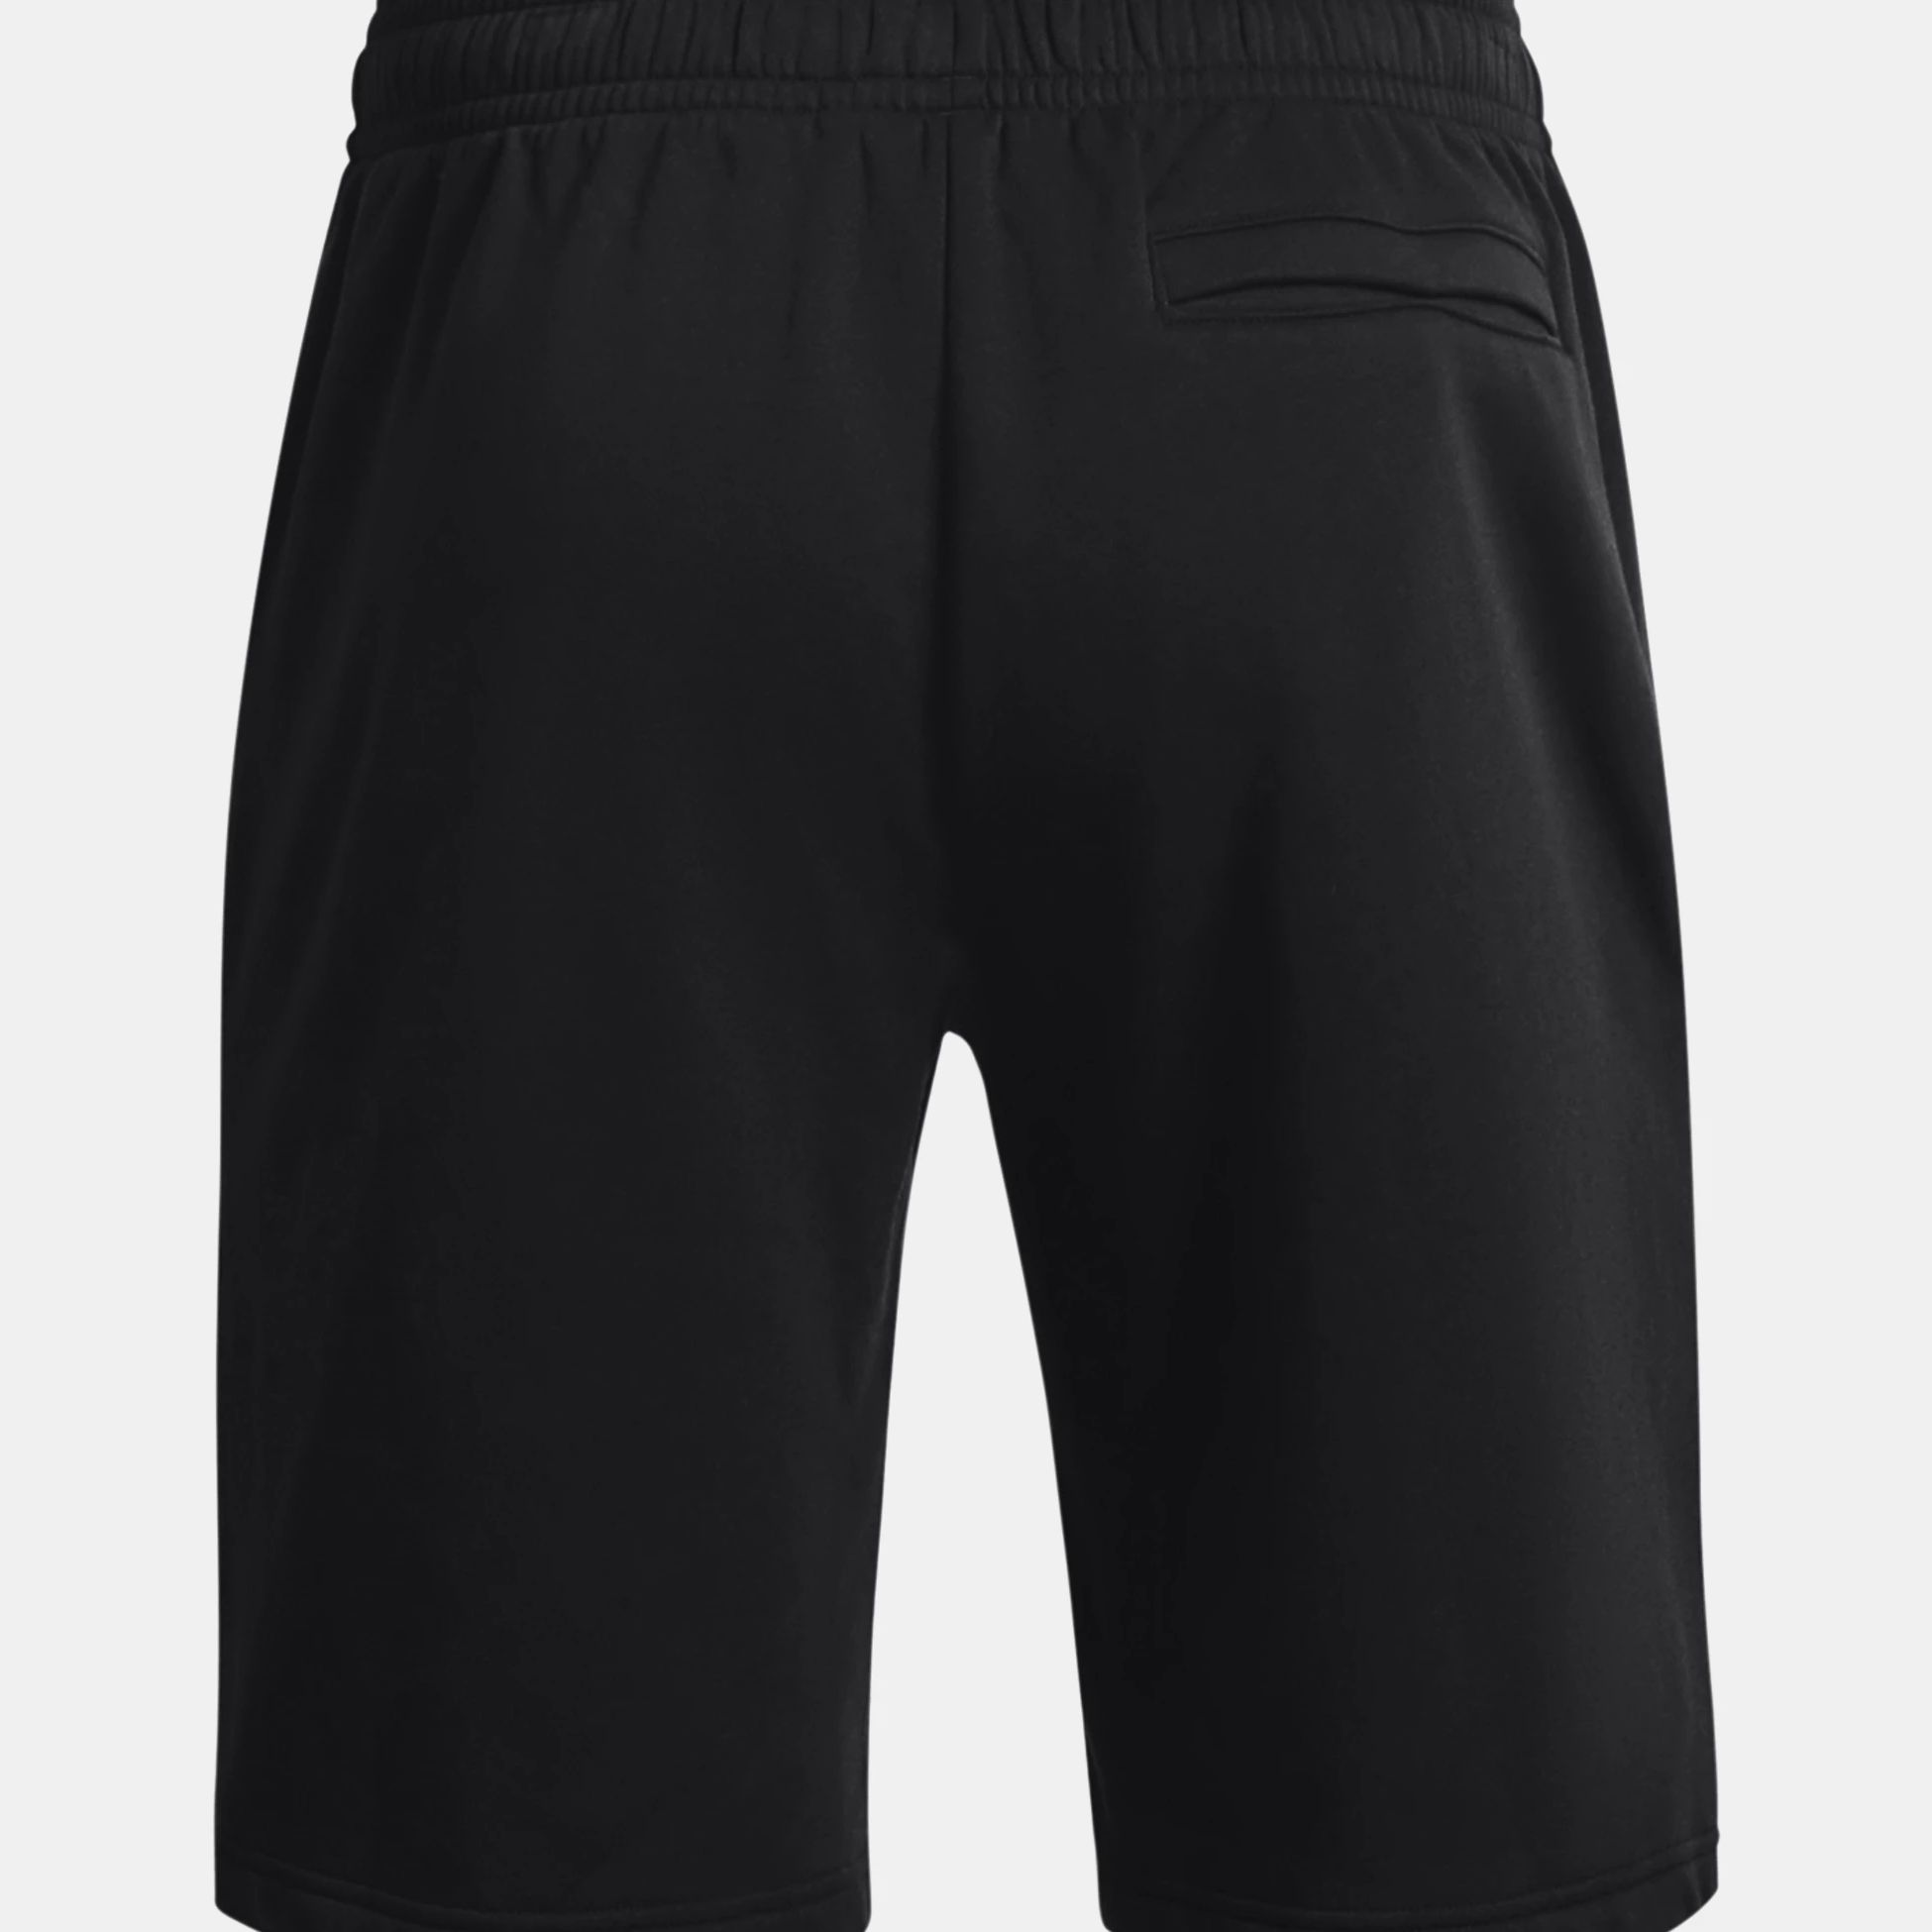 Shorts -  under armour UA Rival Fleece Lockertag Shorts 1625